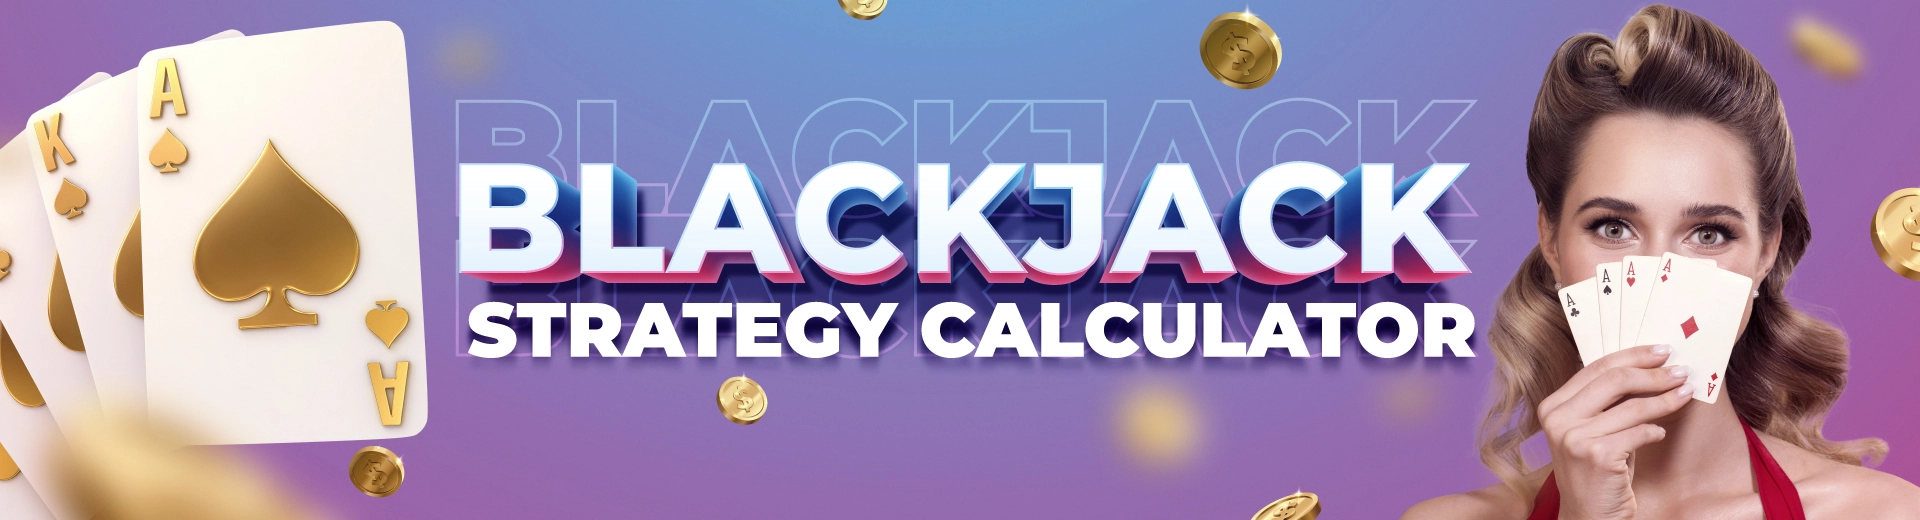 Online Blackjack Strategy Calculator - OKBET blackjack